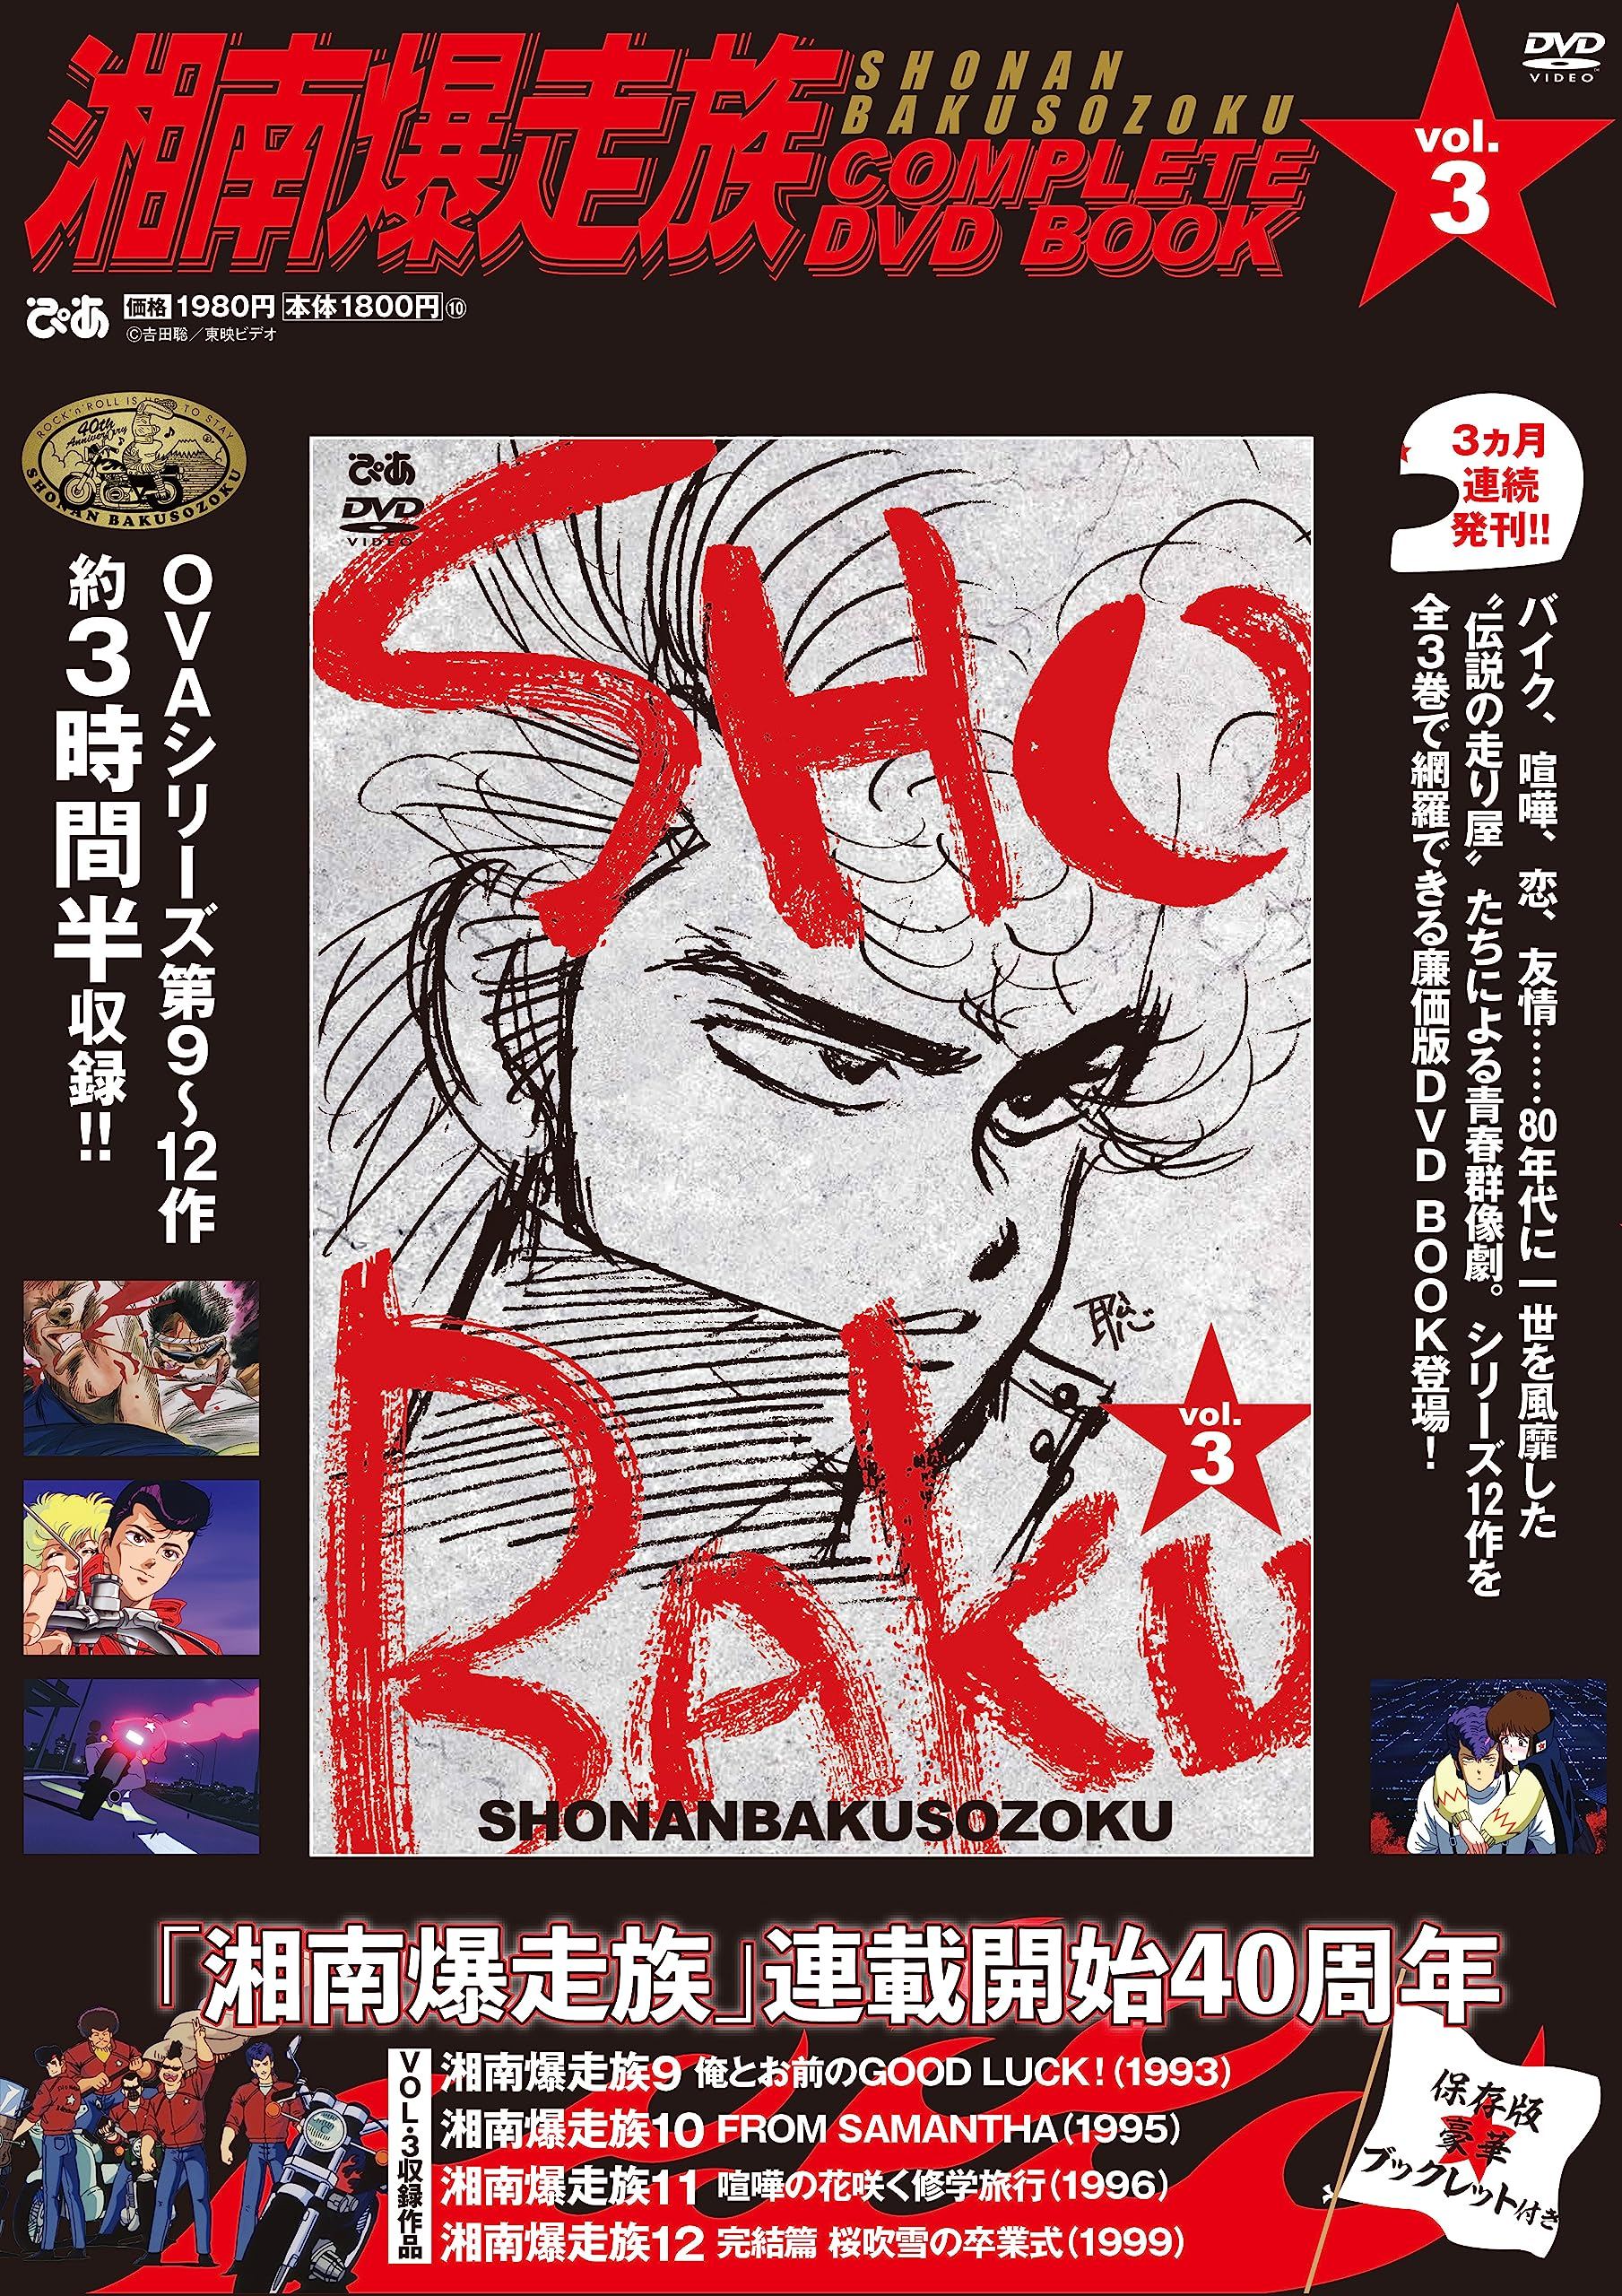 Shonan Bakusozoku Complete Dvd Book Vol.3